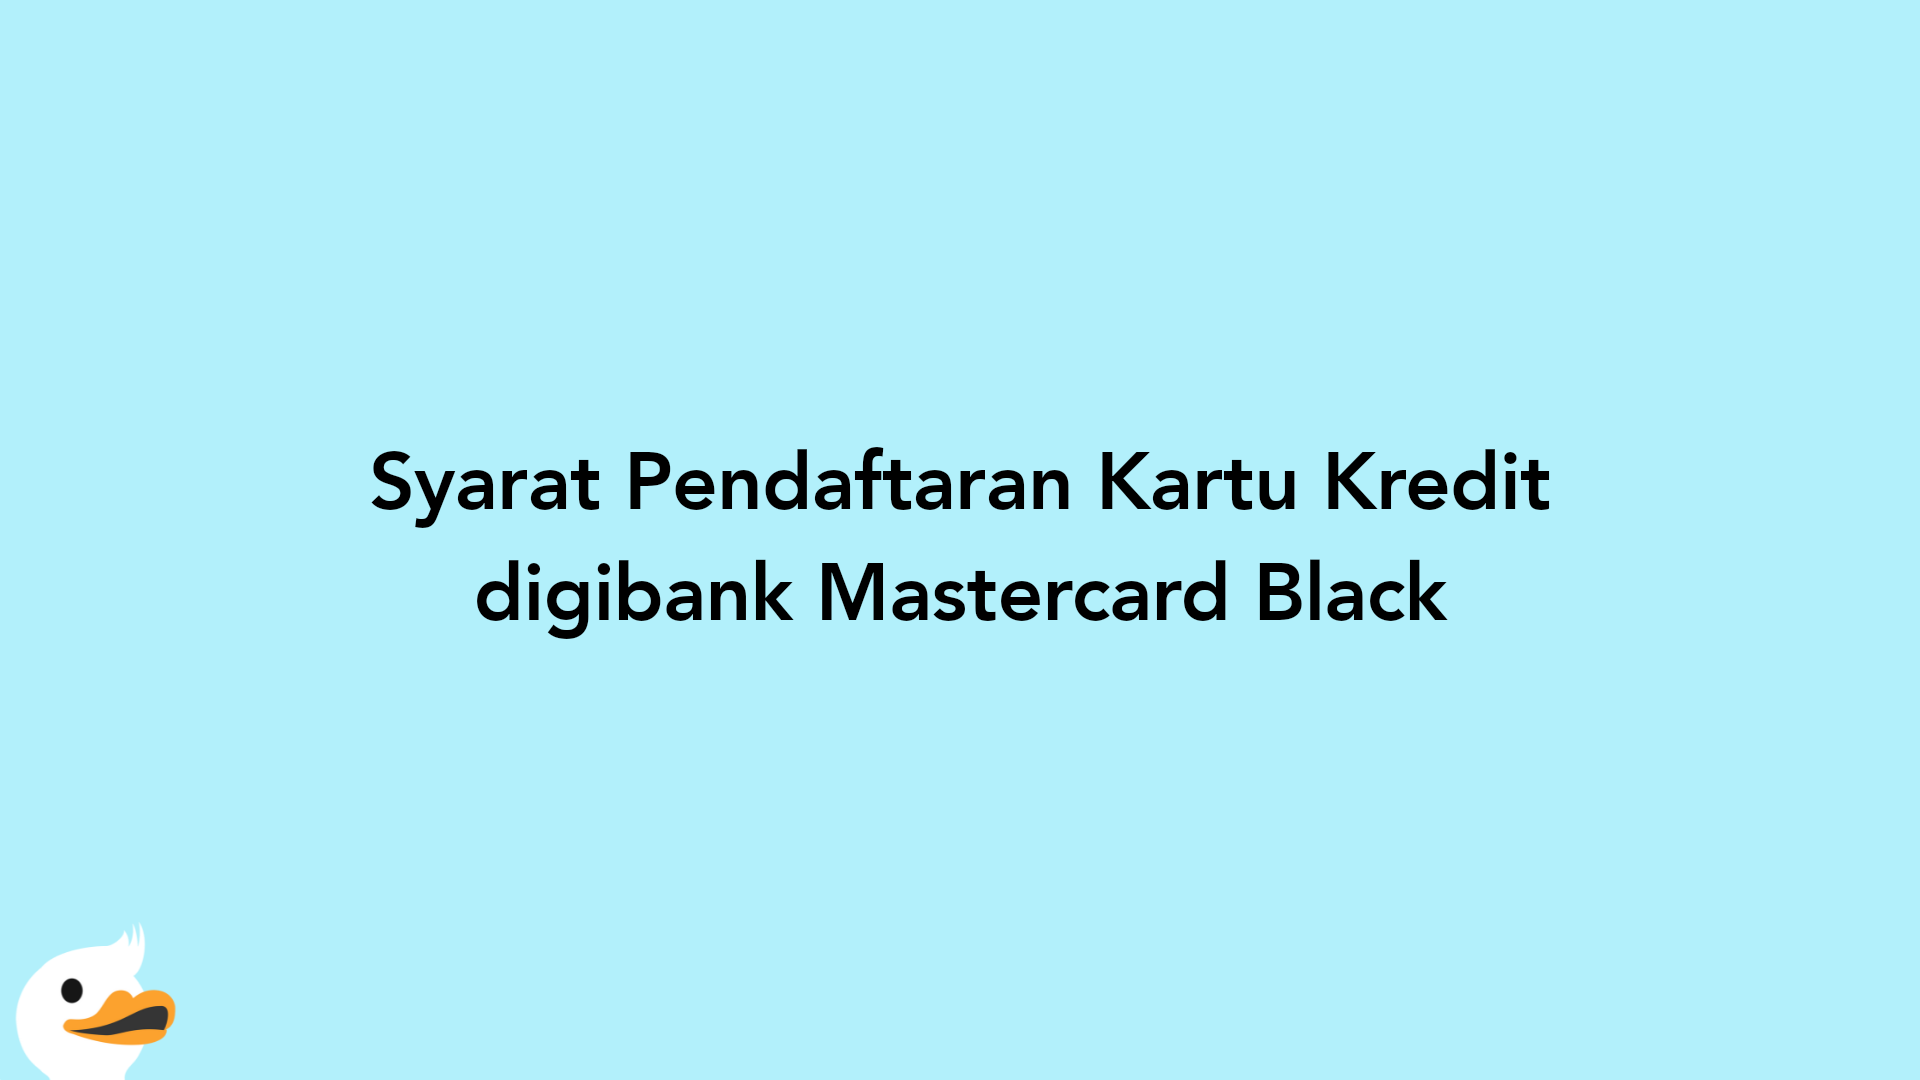 Syarat Pendaftaran Kartu Kredit digibank Mastercard Black